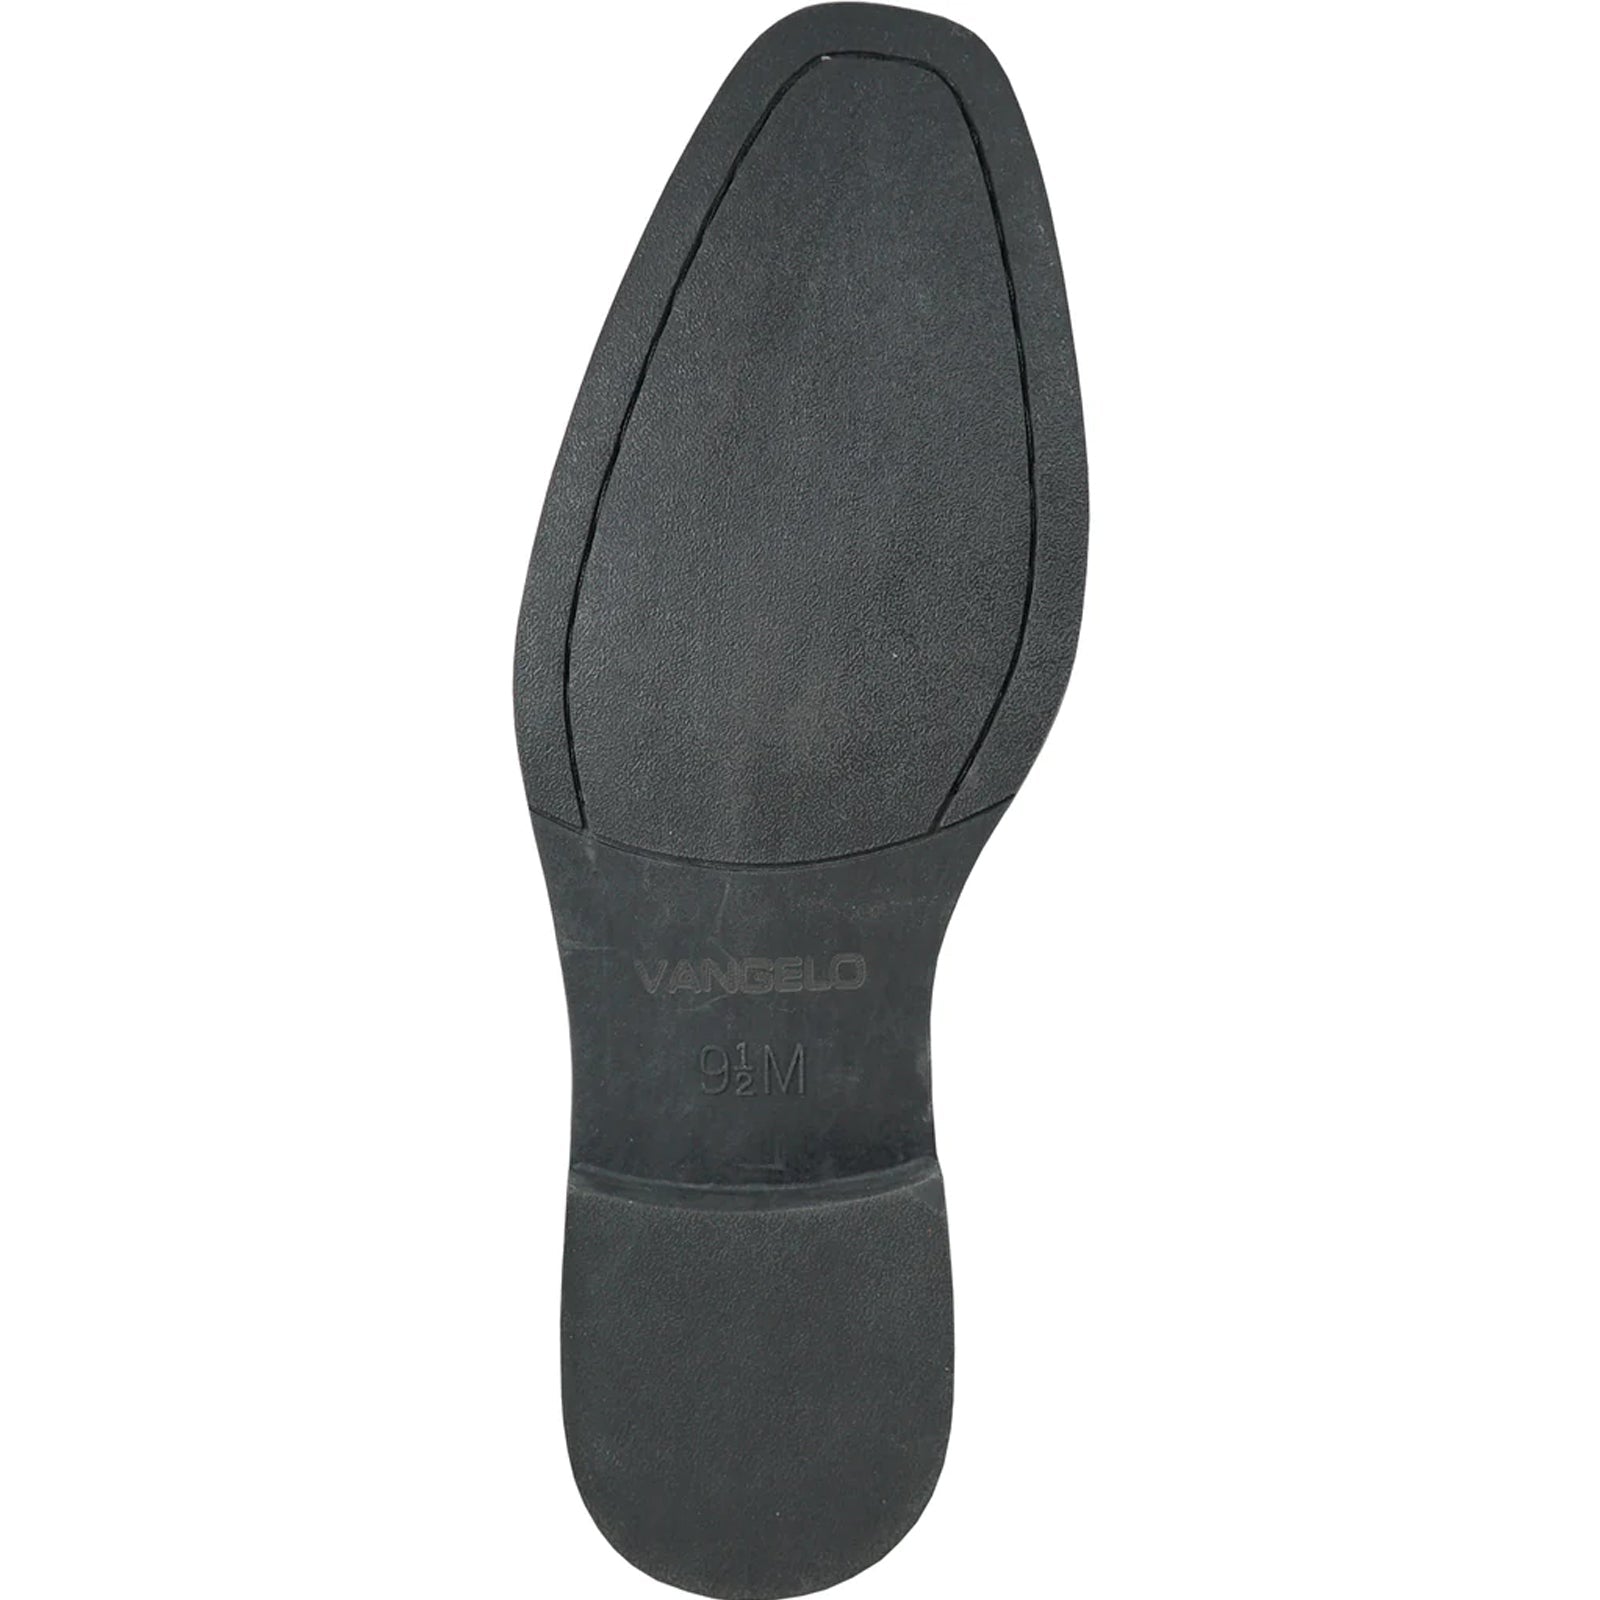 "Ivory Men's Classic Plain Toe Loafer Dress Shoe - Slip On Style"